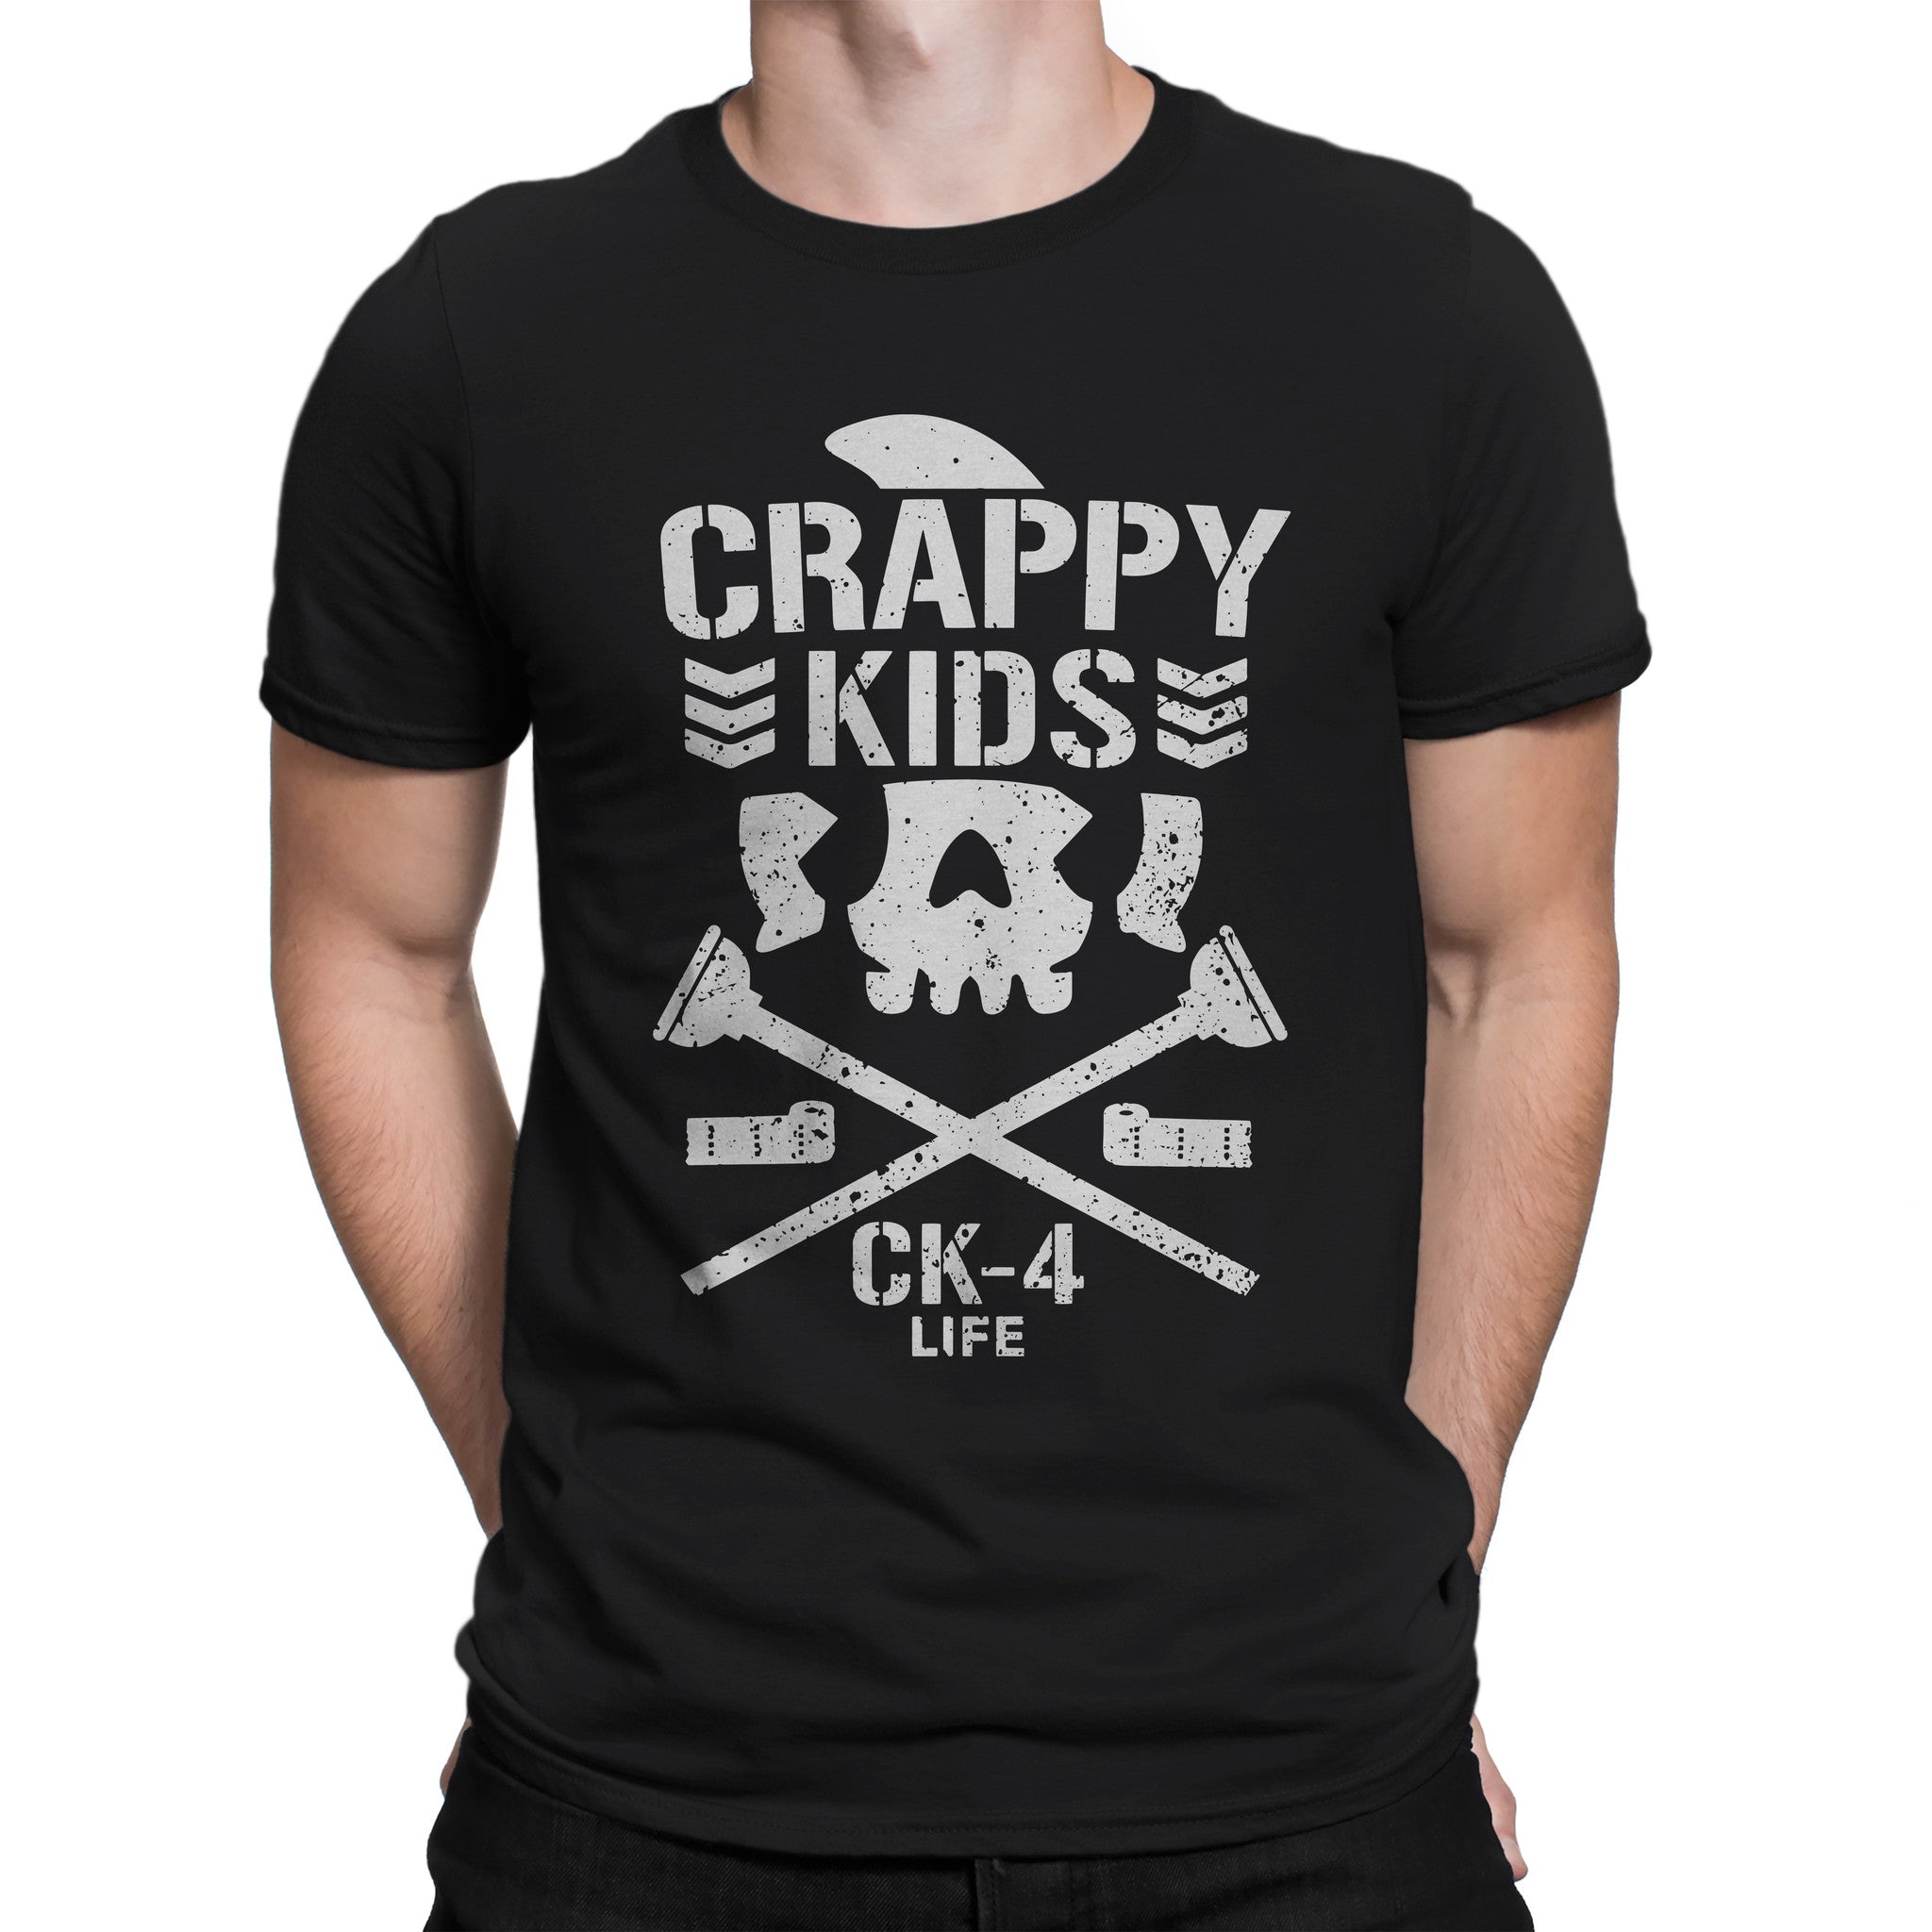 Crappy Club T-Shirt